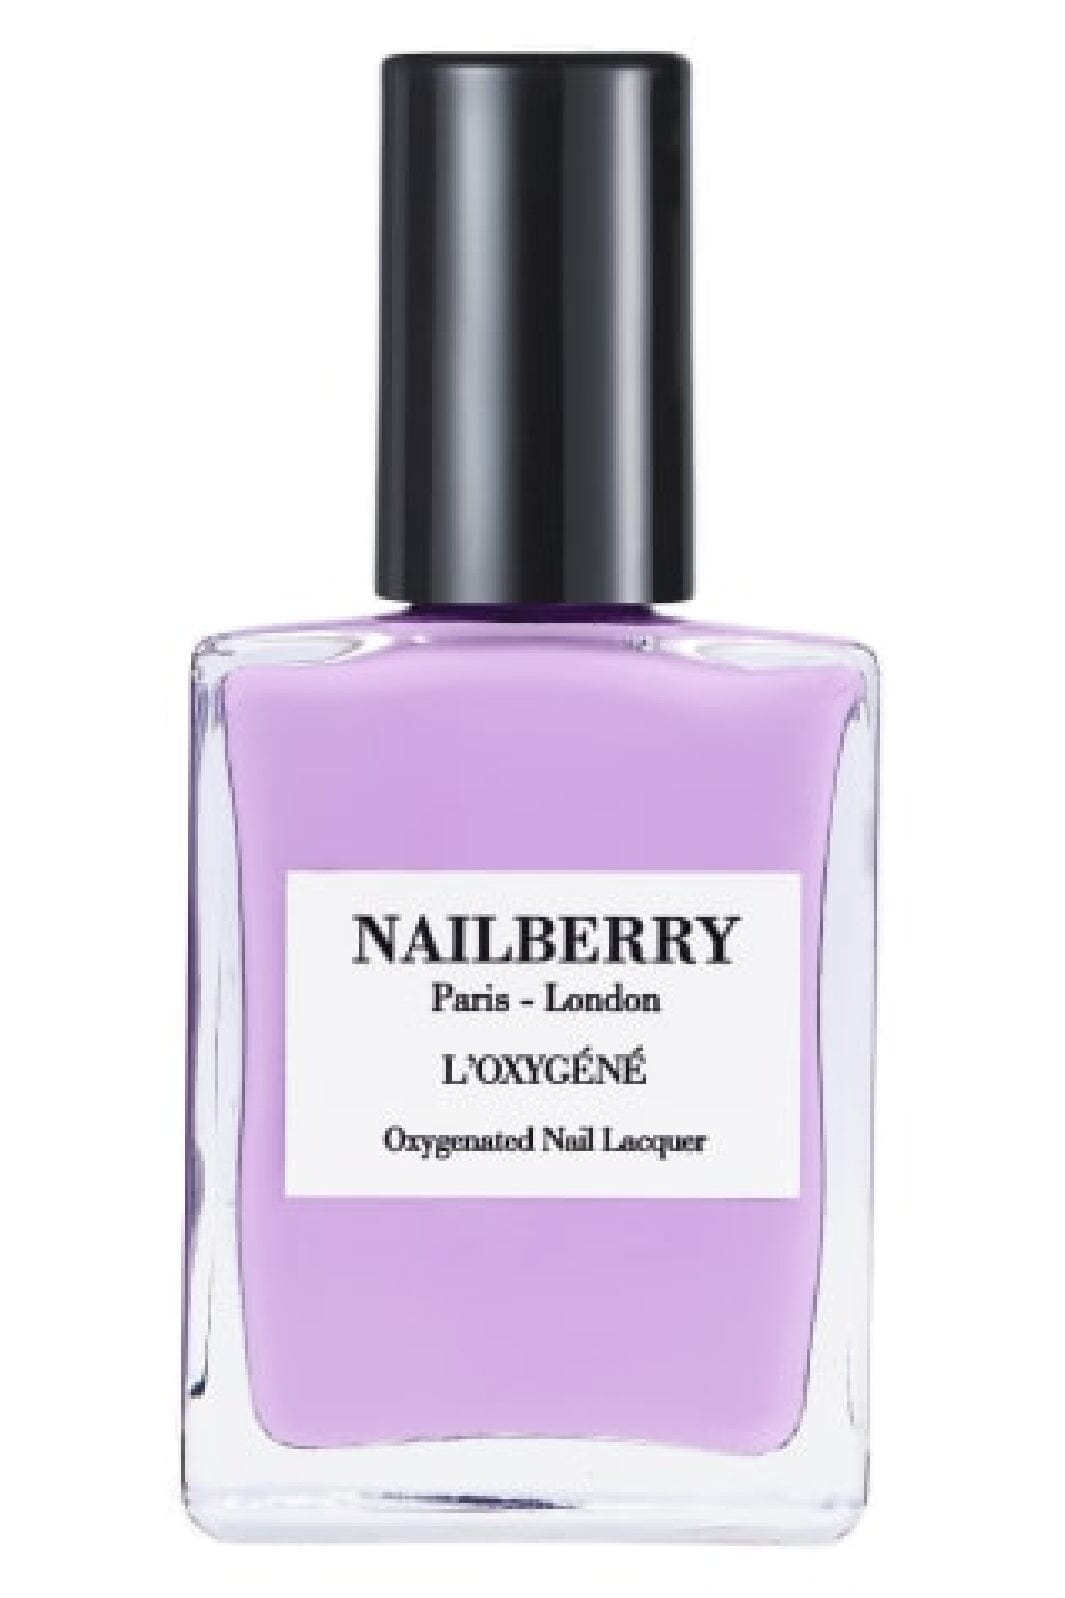 Nailberry - Lavender Fields - Pop Pastel Purple Neglelak 